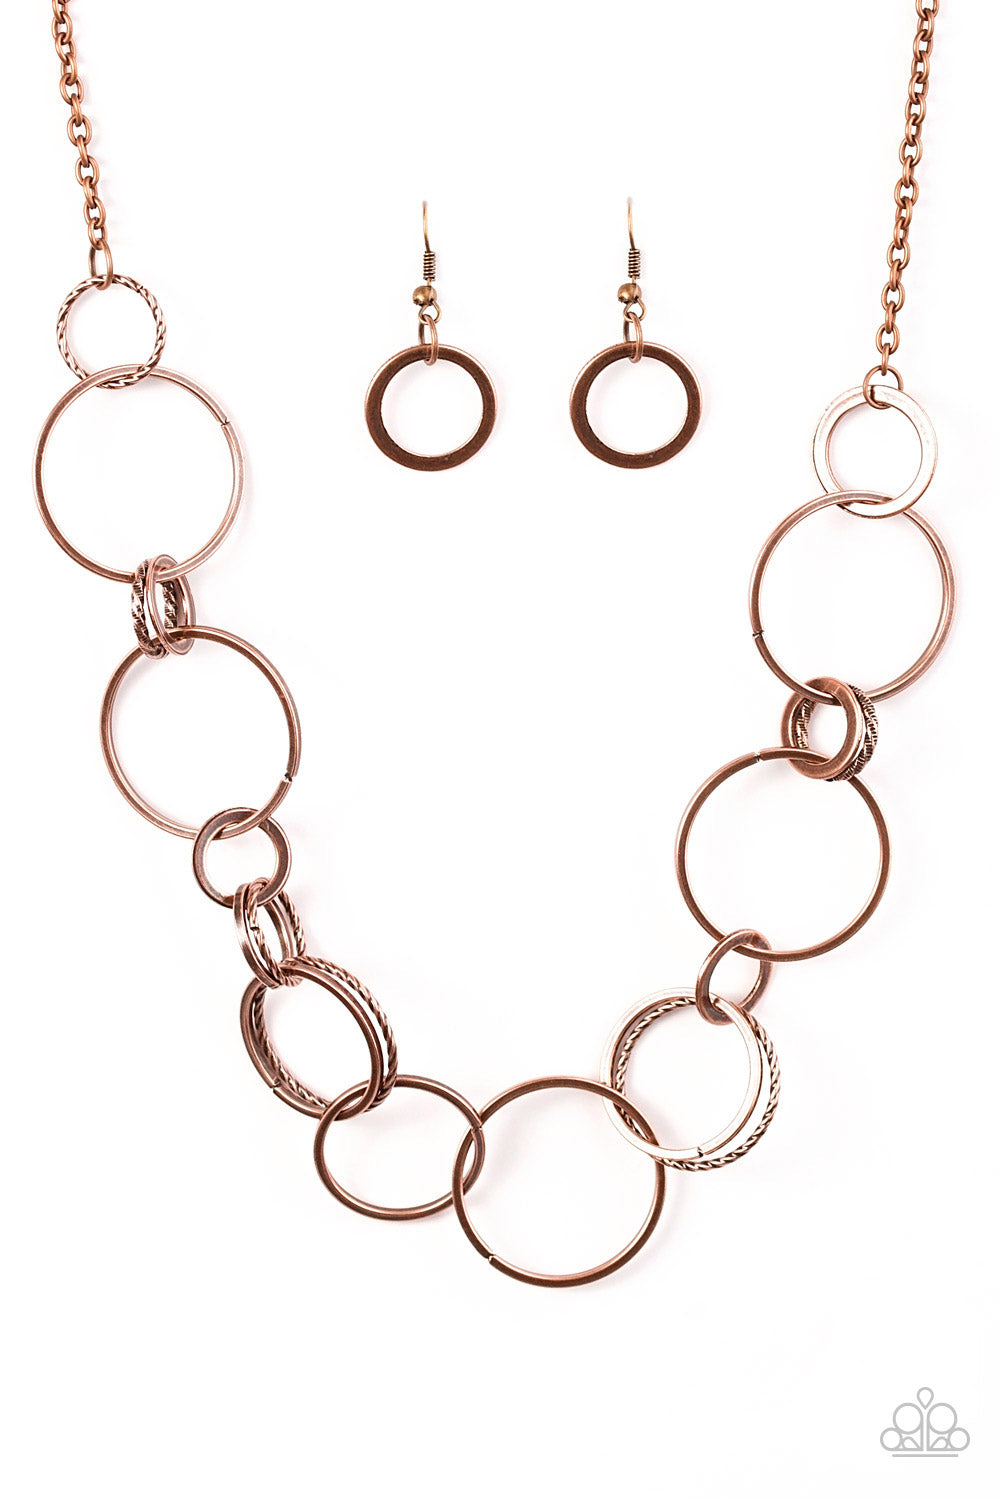 Paparazzi Accessories - Follow The RINGLEADER - Copper Necklace